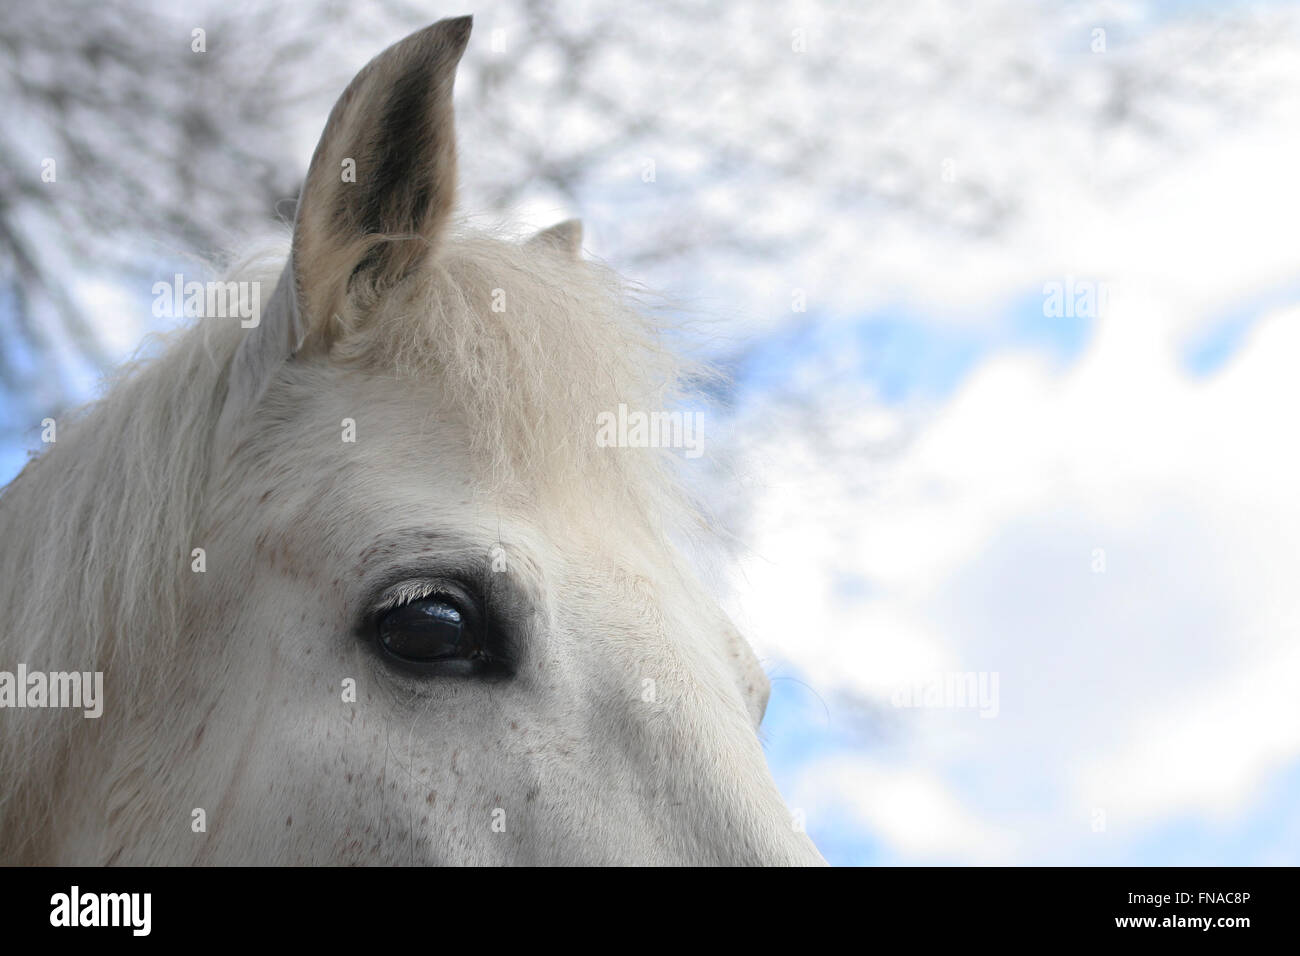 The big black eye of a white horse Stock Photo